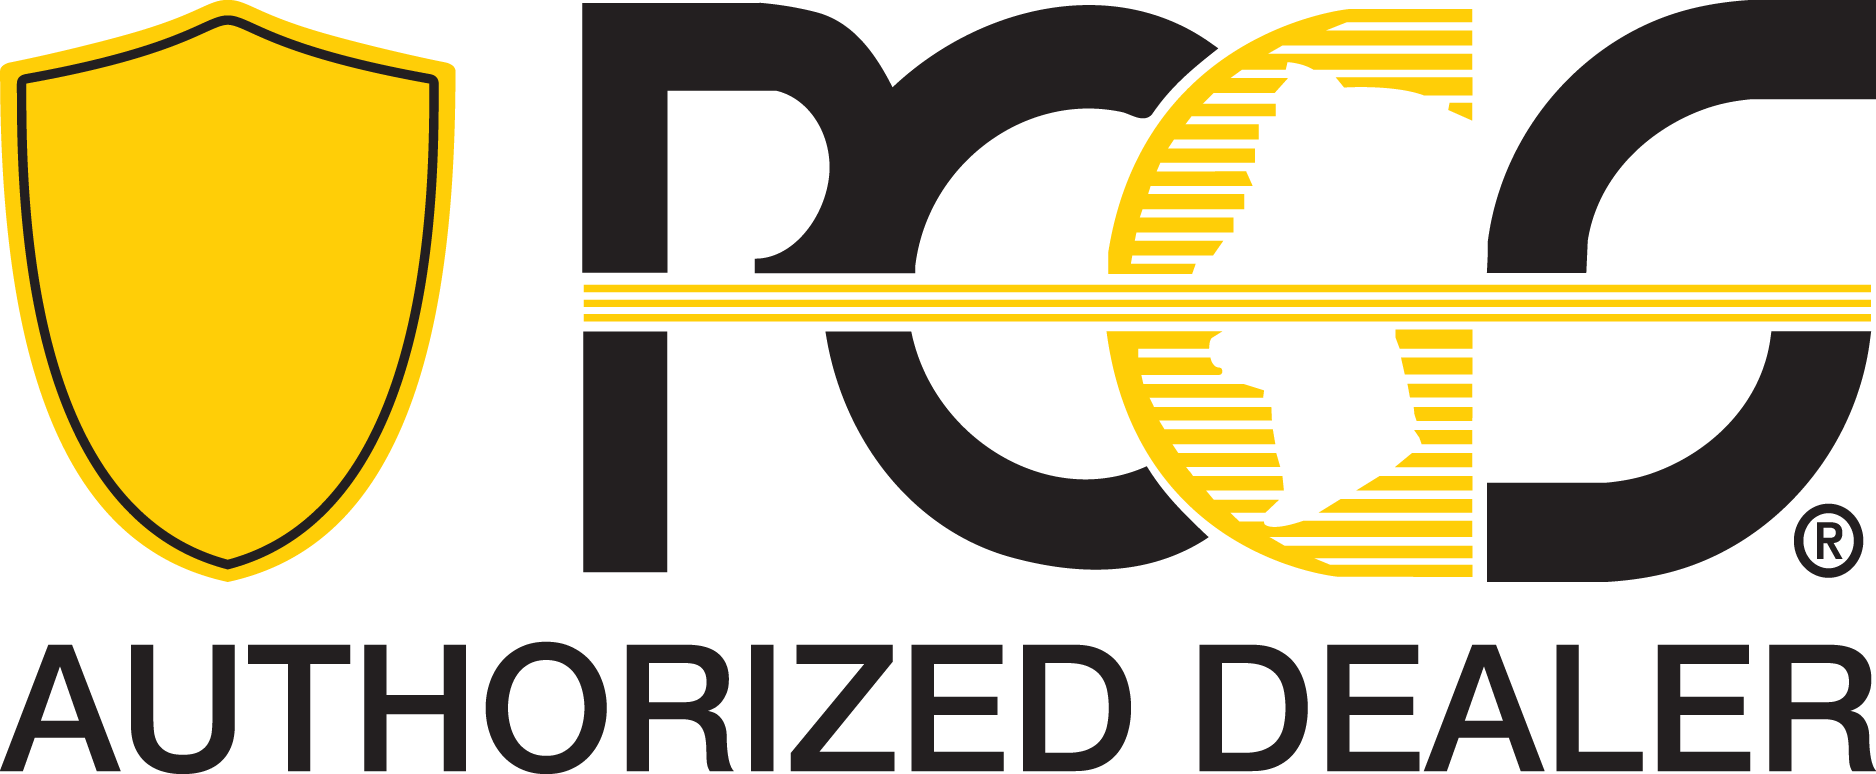 PCGS authorized dealer logo